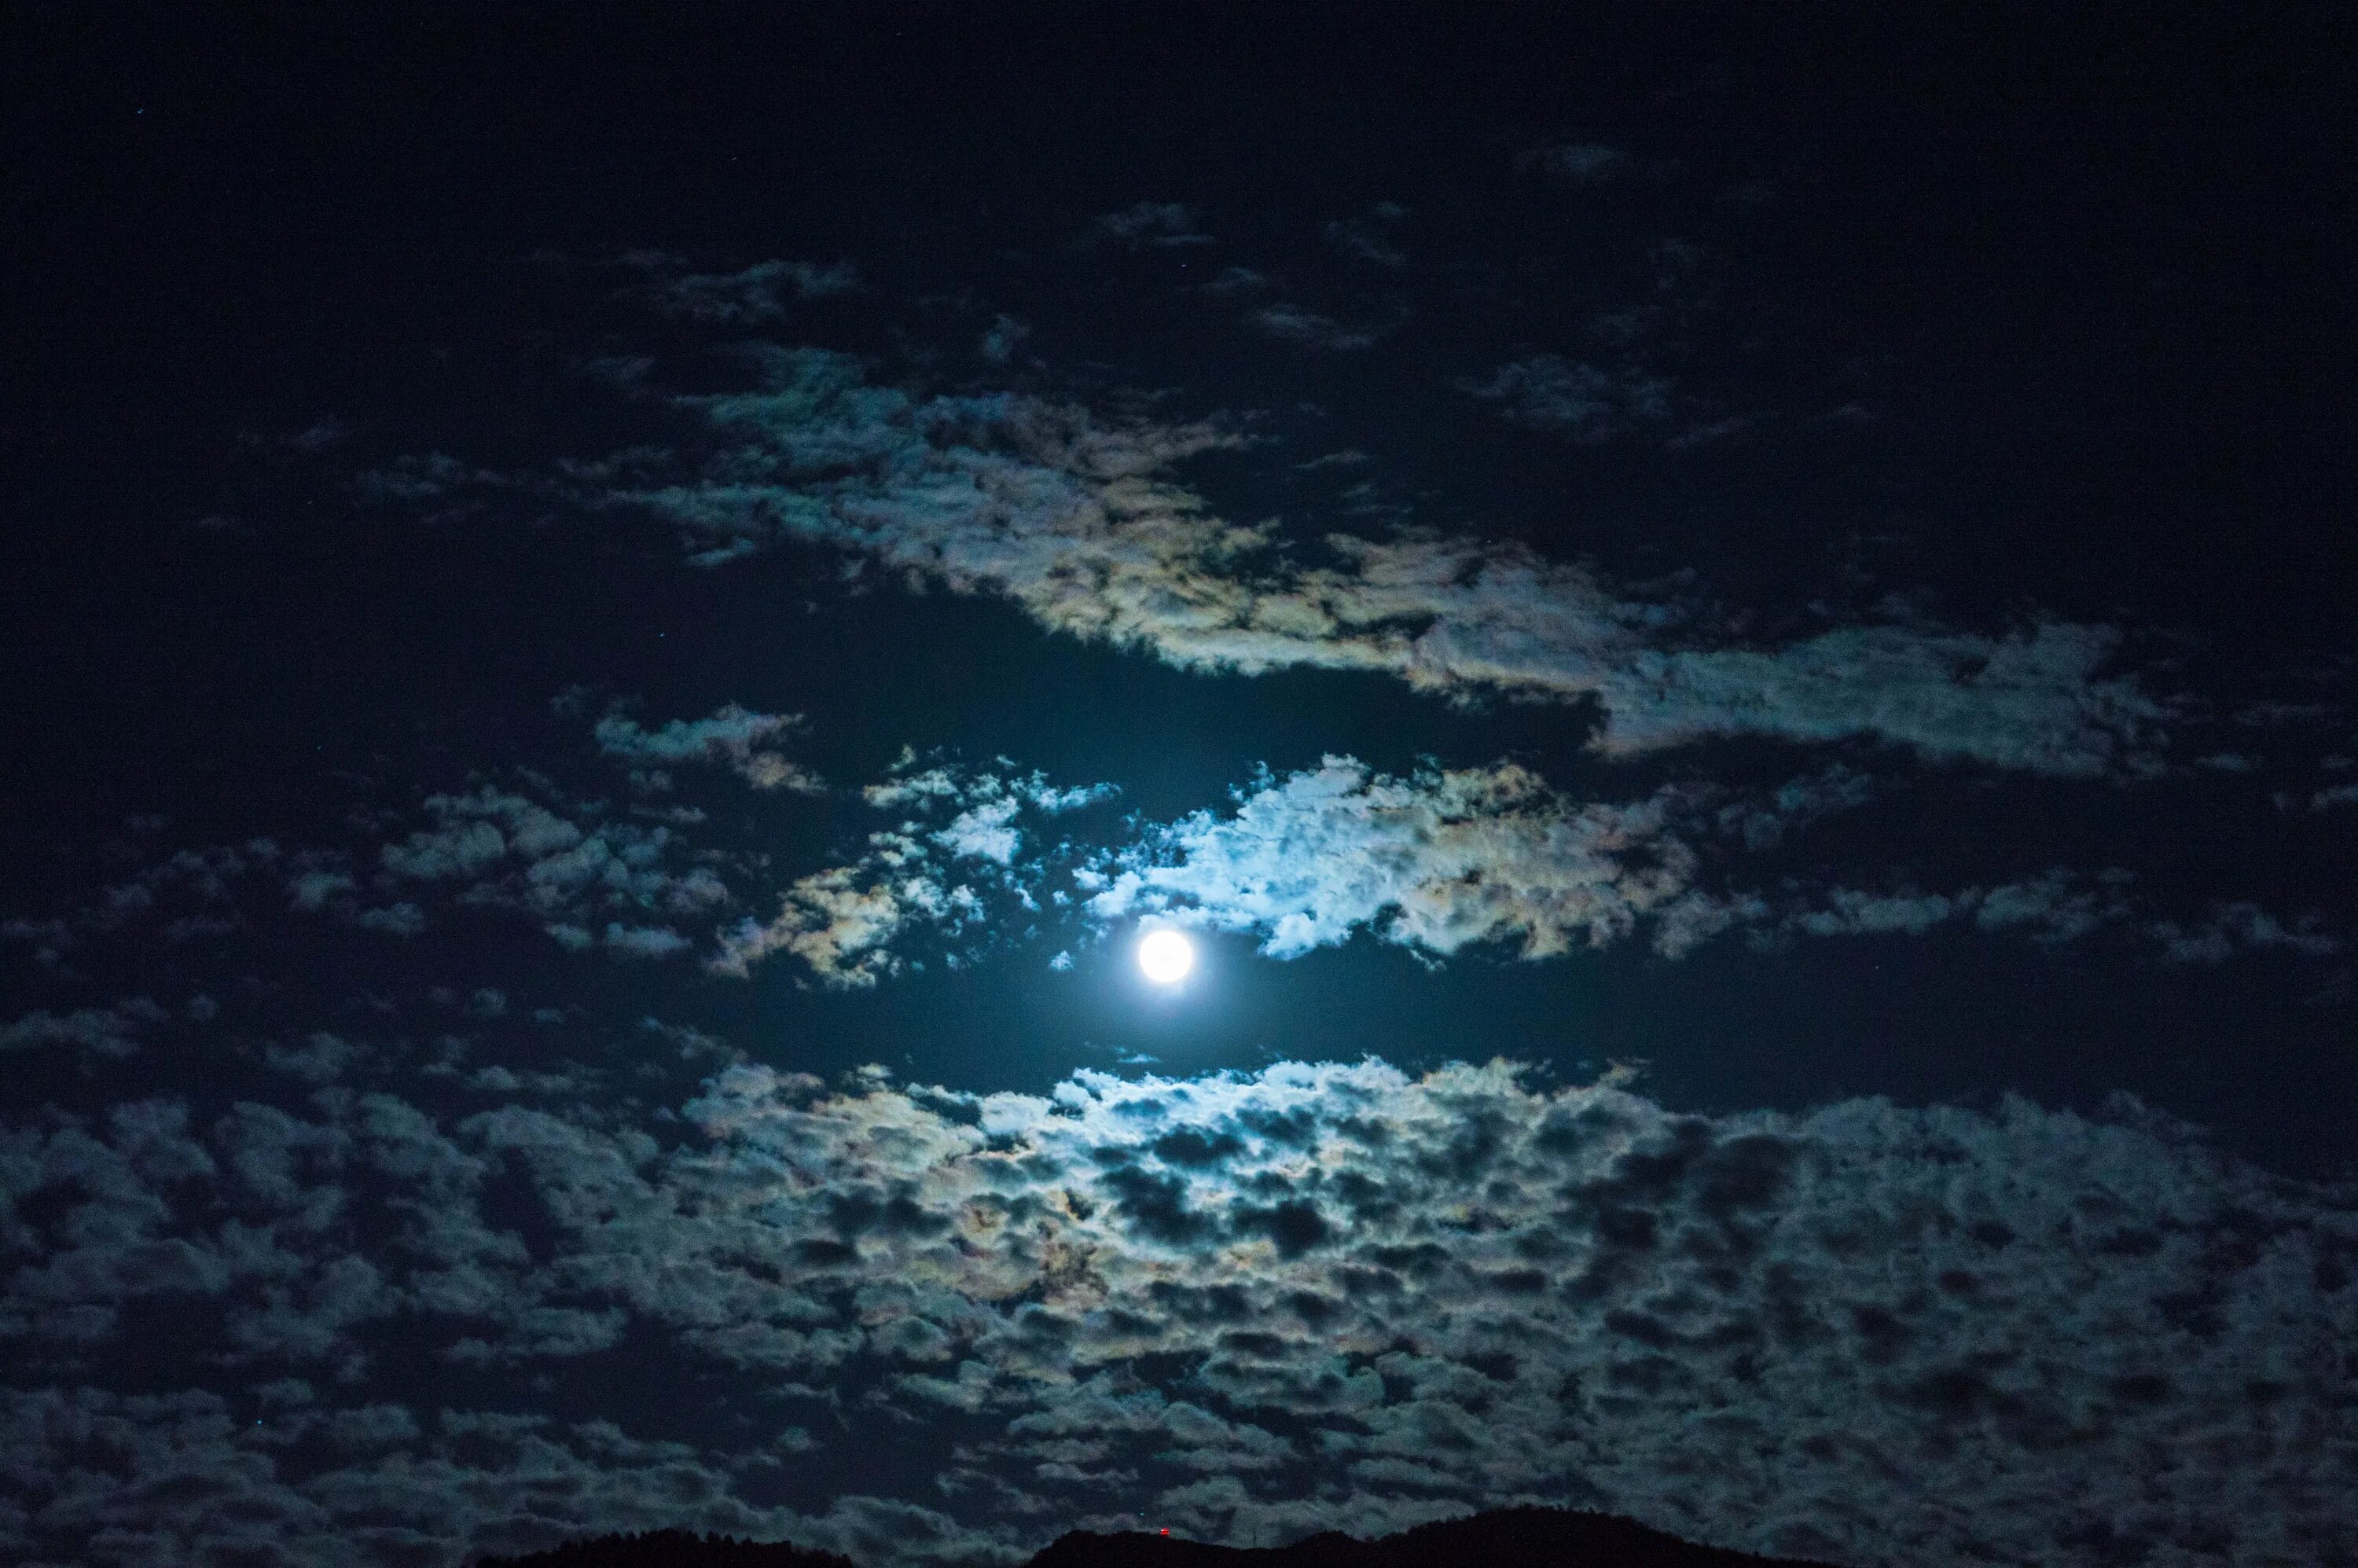 Небе погаснет луна. Ночное небо. Ночное небо с облаками. Ночное небо с тучами. Ночное небо с луной.